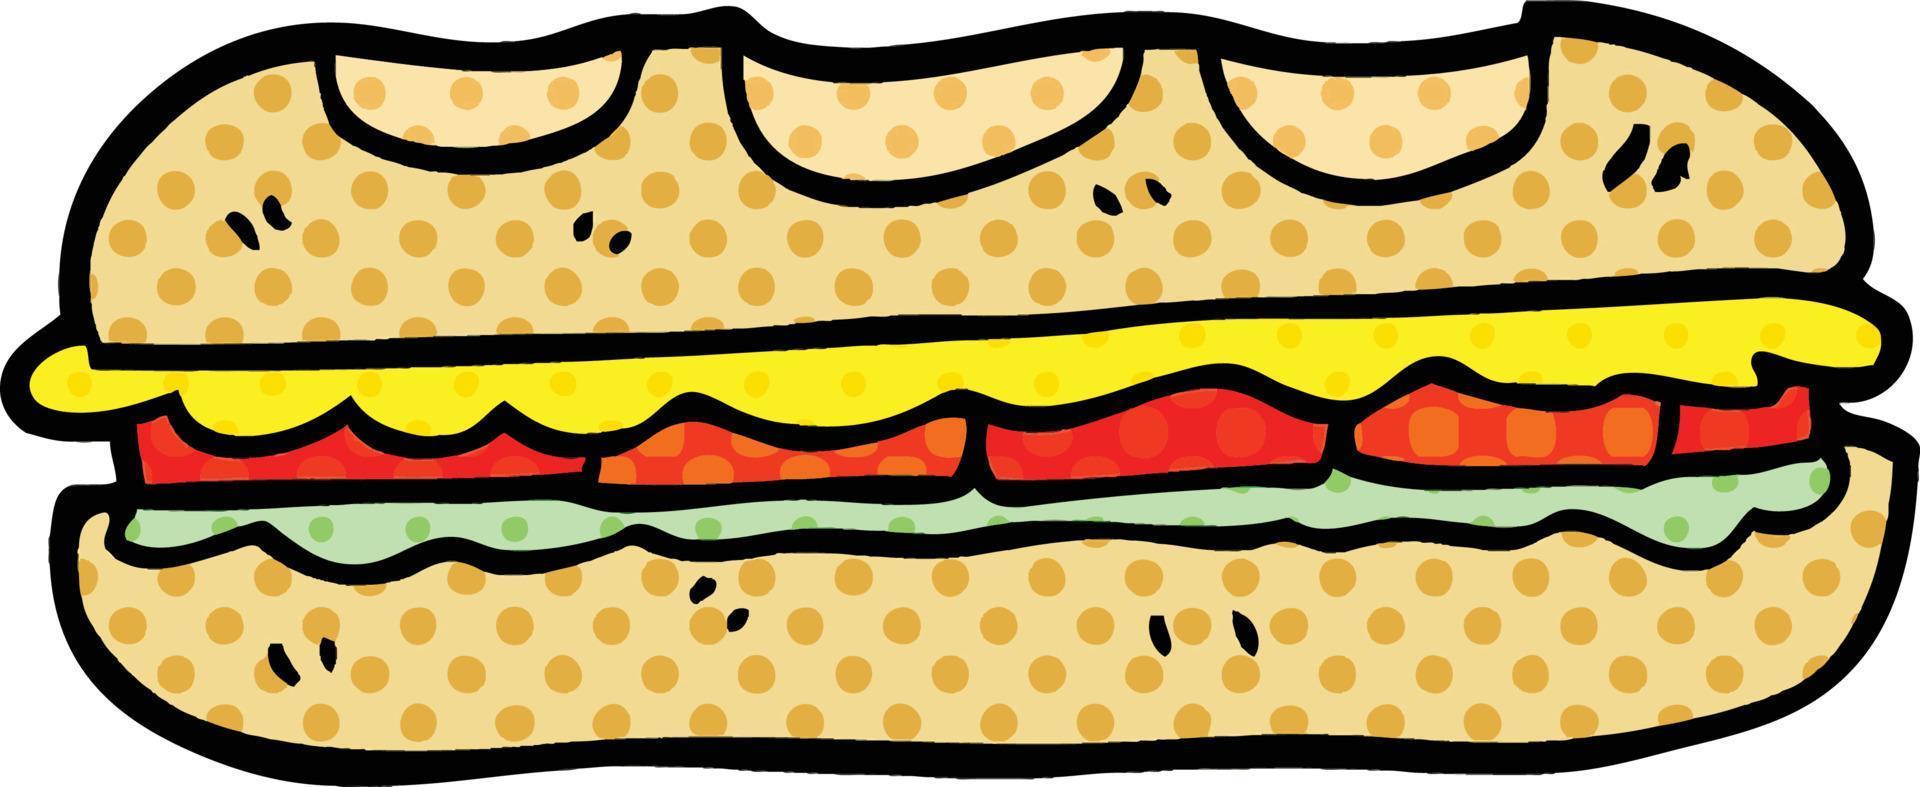 Comic-Stil Cartoon leckeres Sandwich vektor